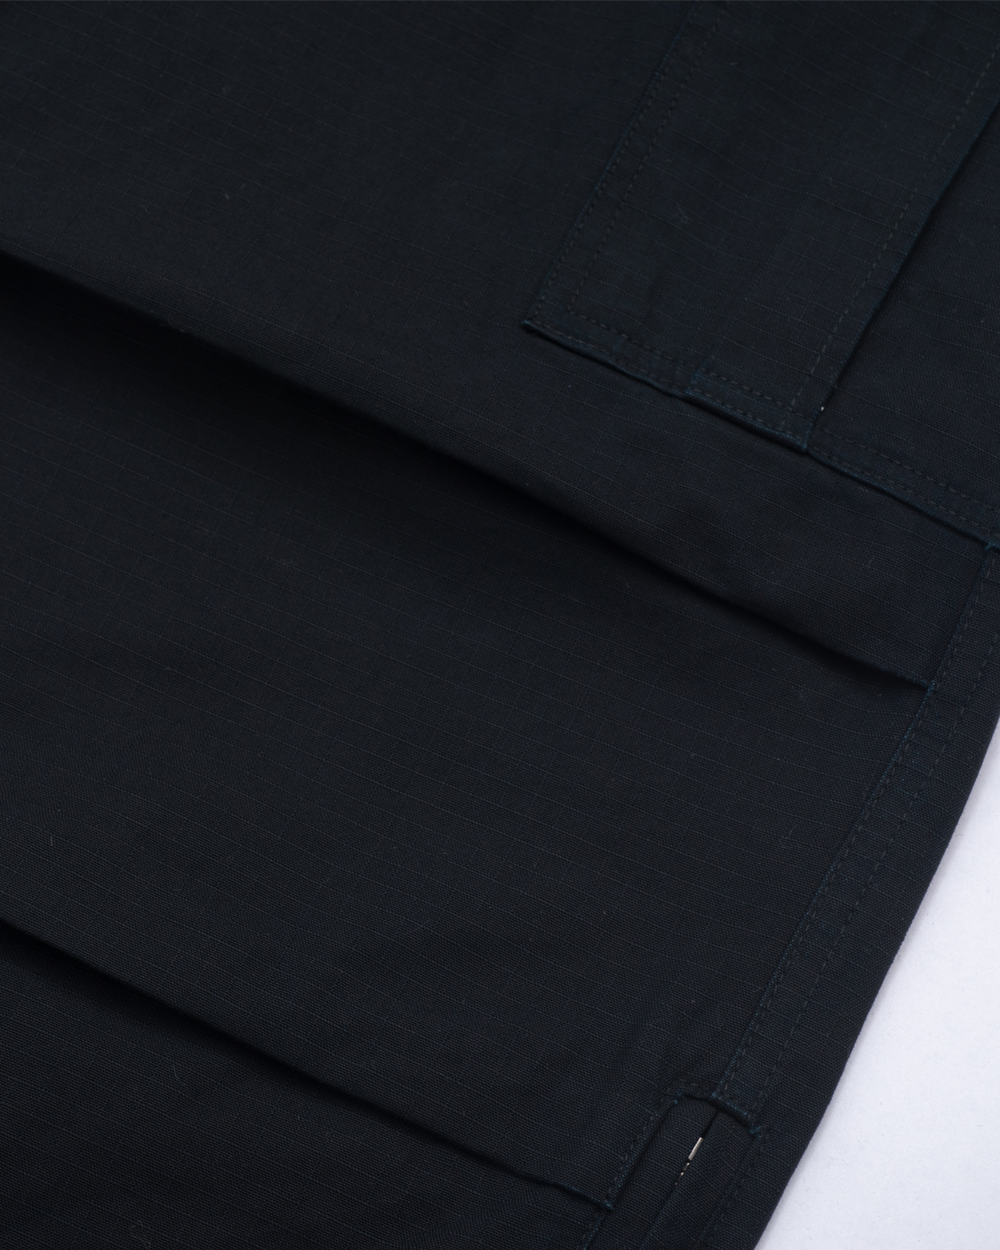 Off The Label handmade bedraggled cargo pants pristine black